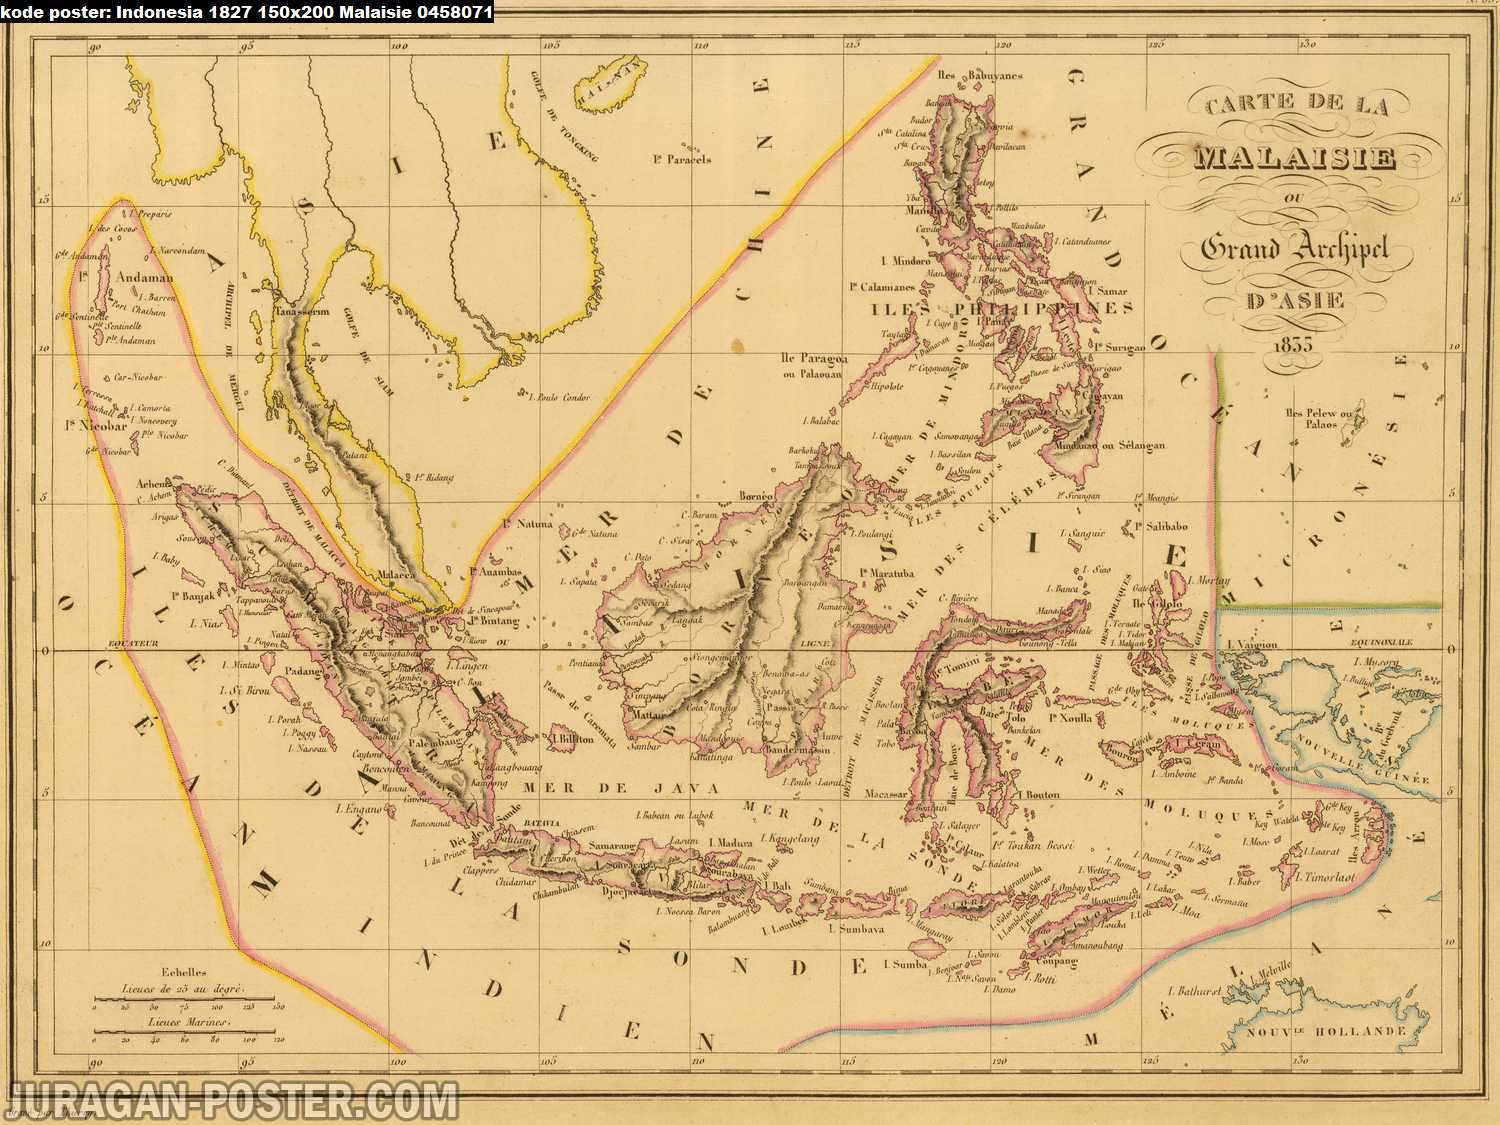 peta indonesia kuno tahun 1827